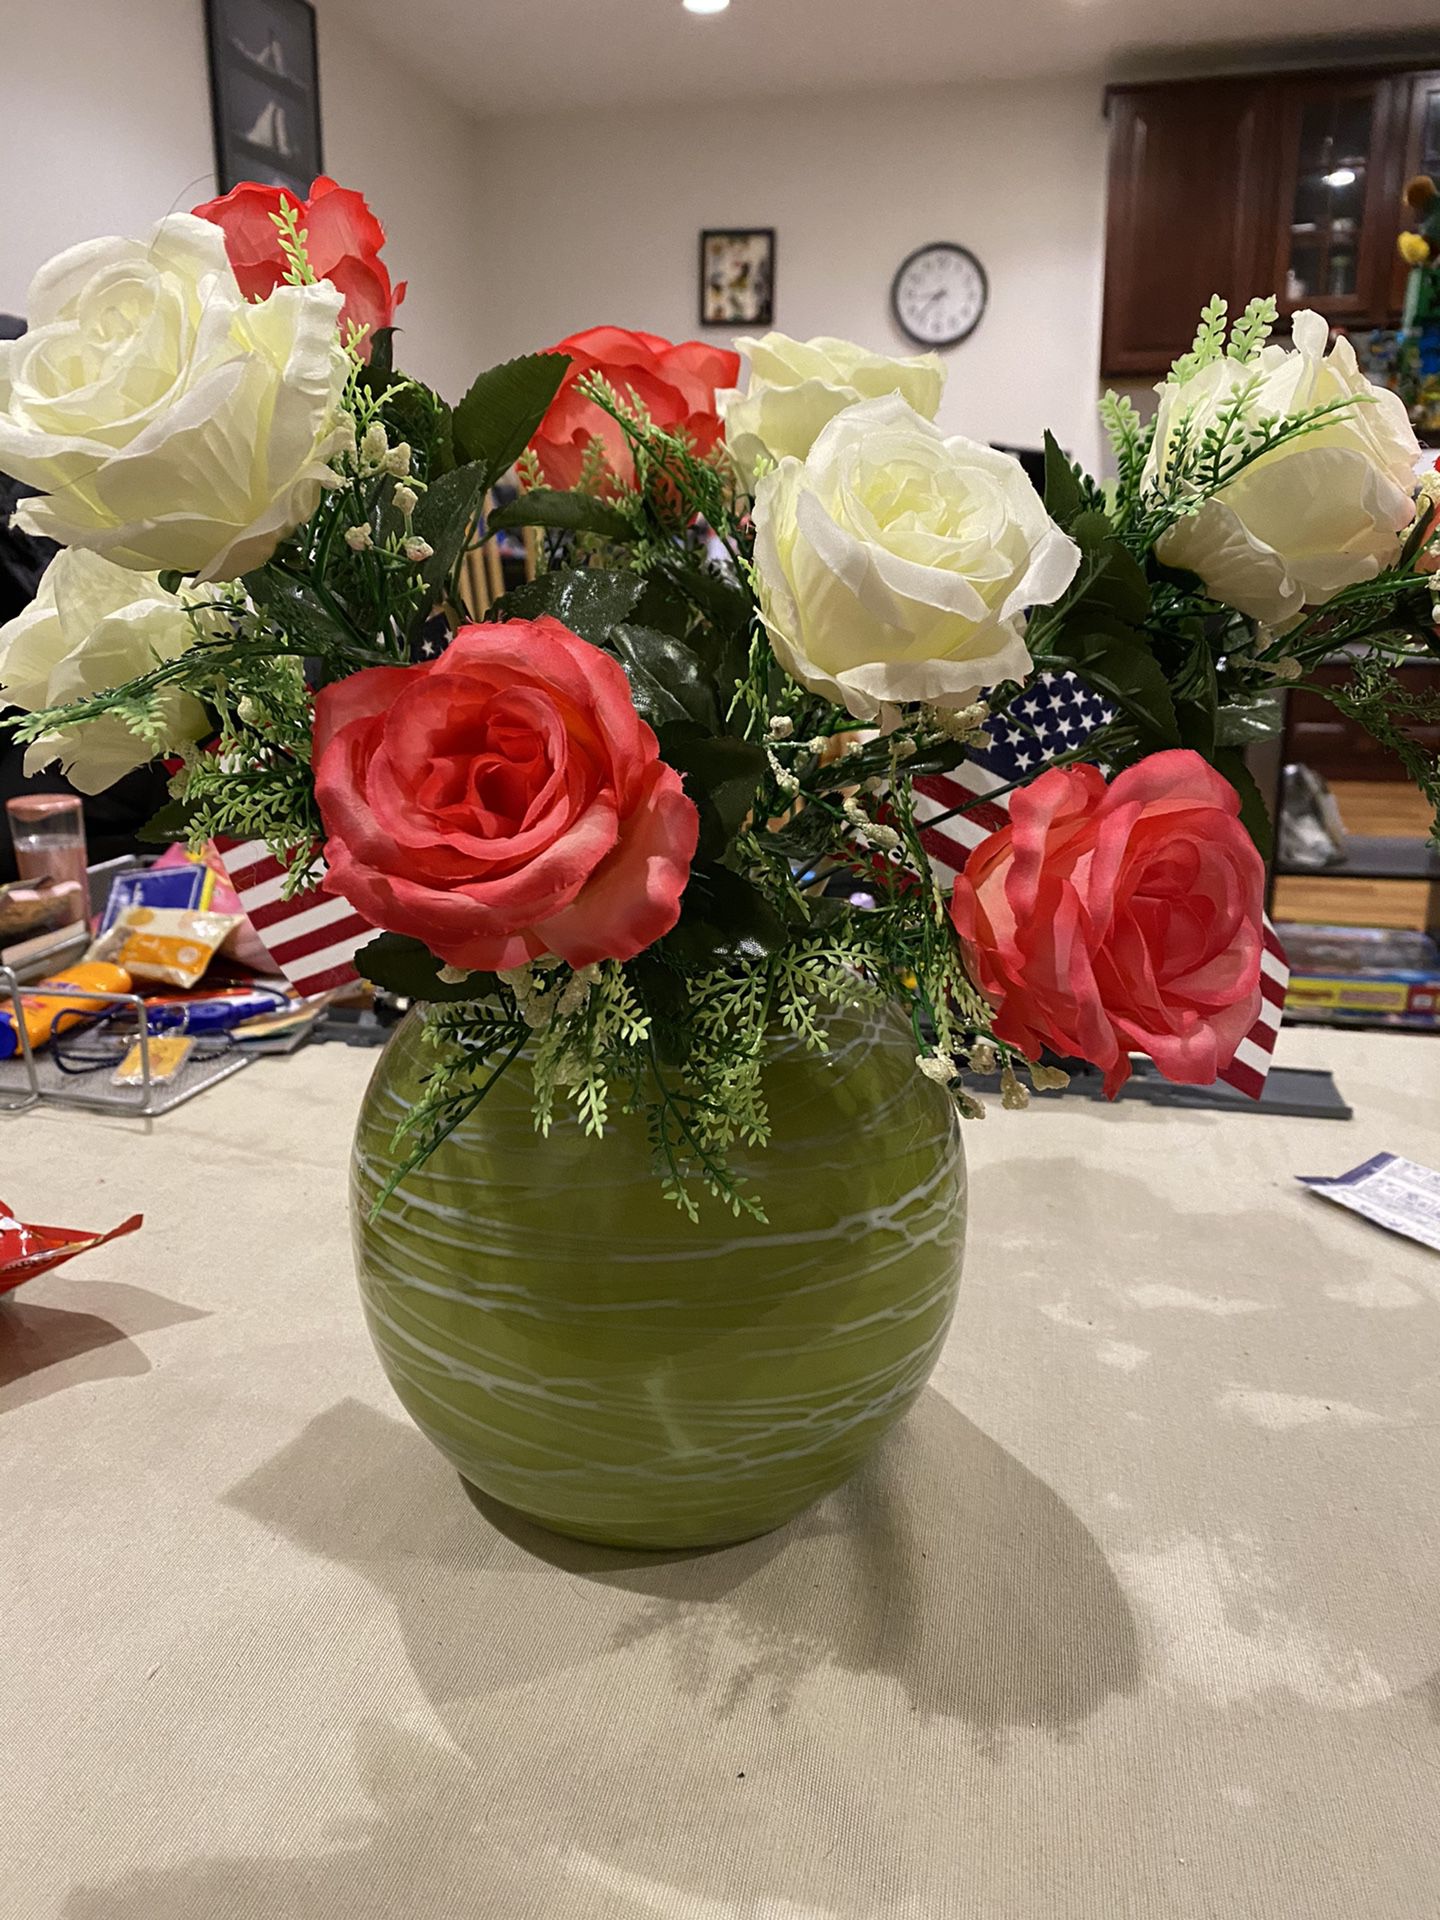 Flower vase and silk flowers